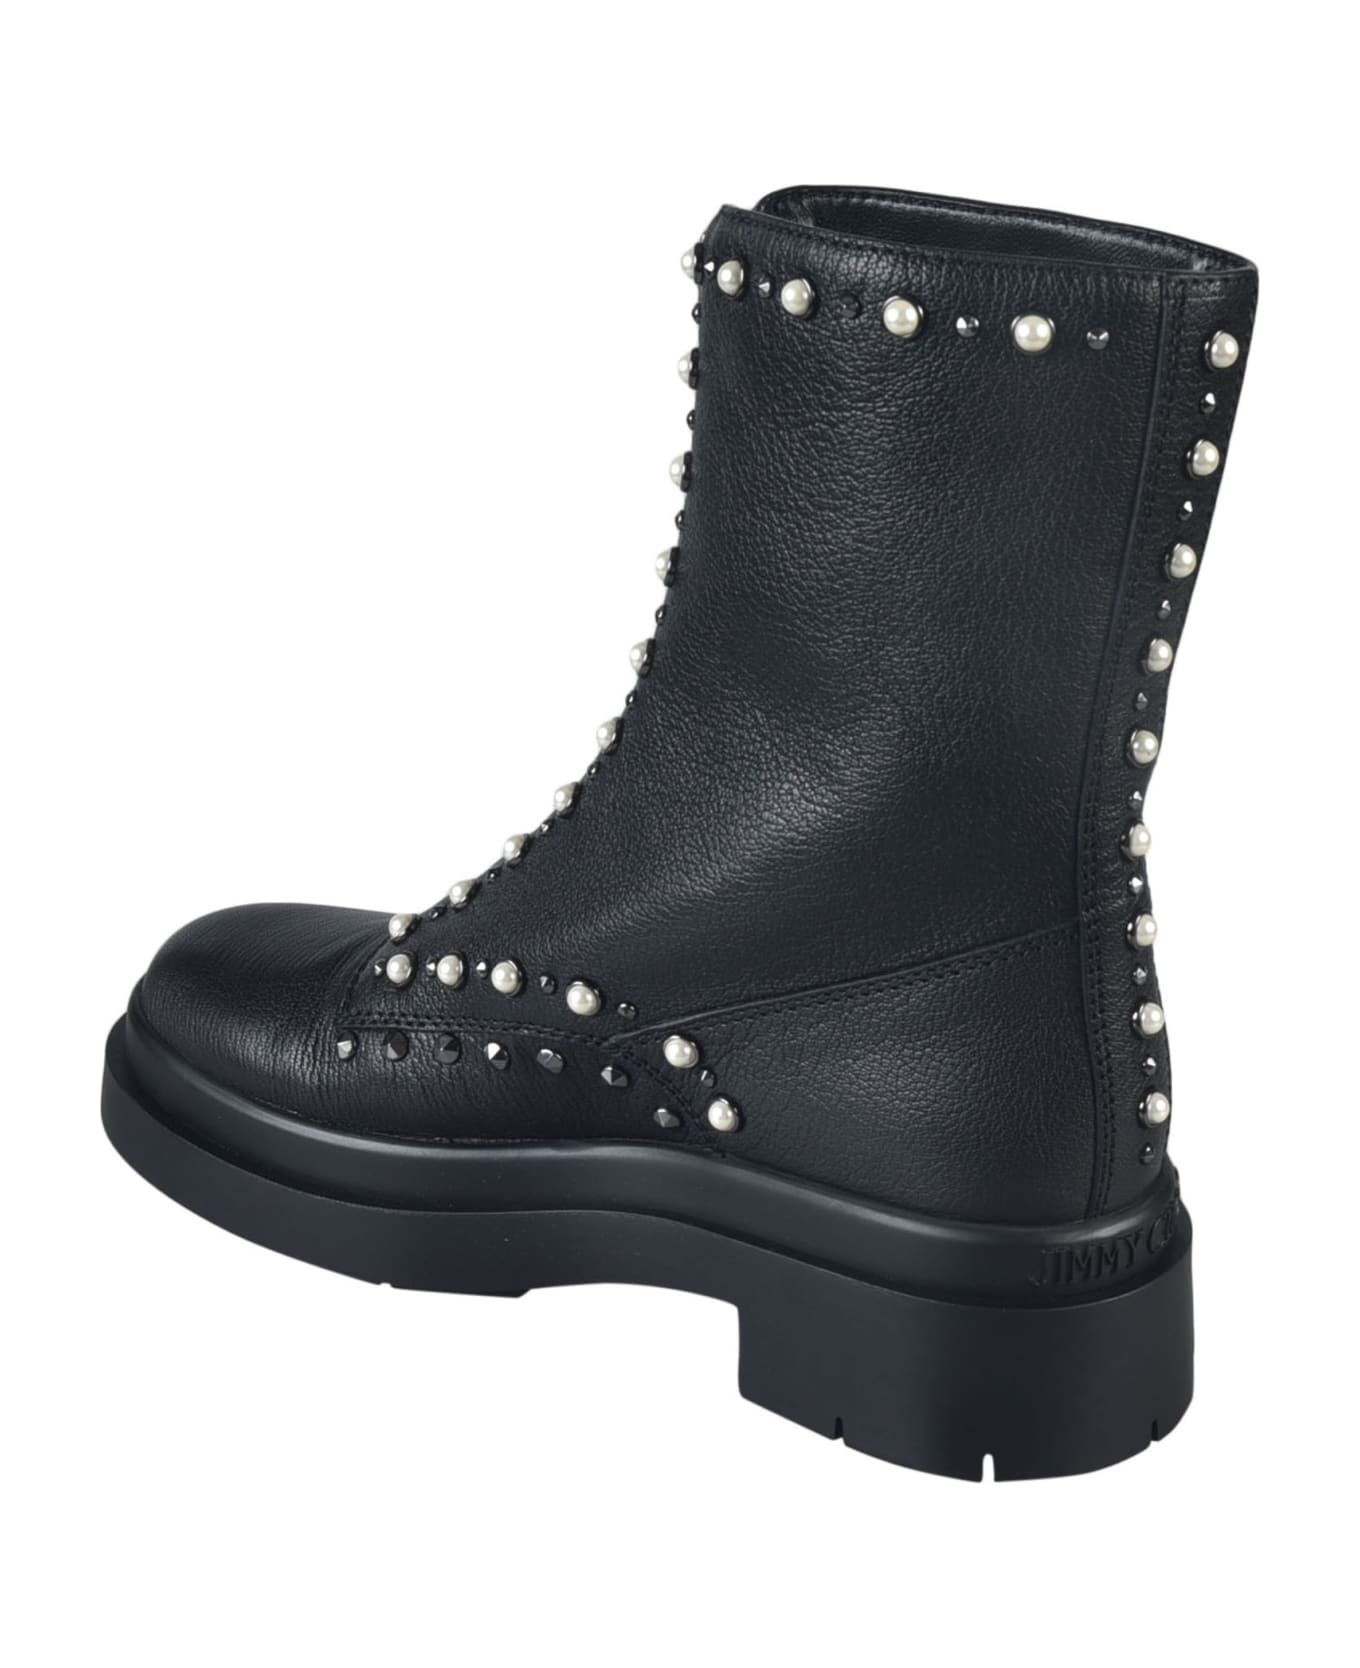 Jimmy Choo Nola Flat Boots - Black/Pearl/Gunmetal ブーツ